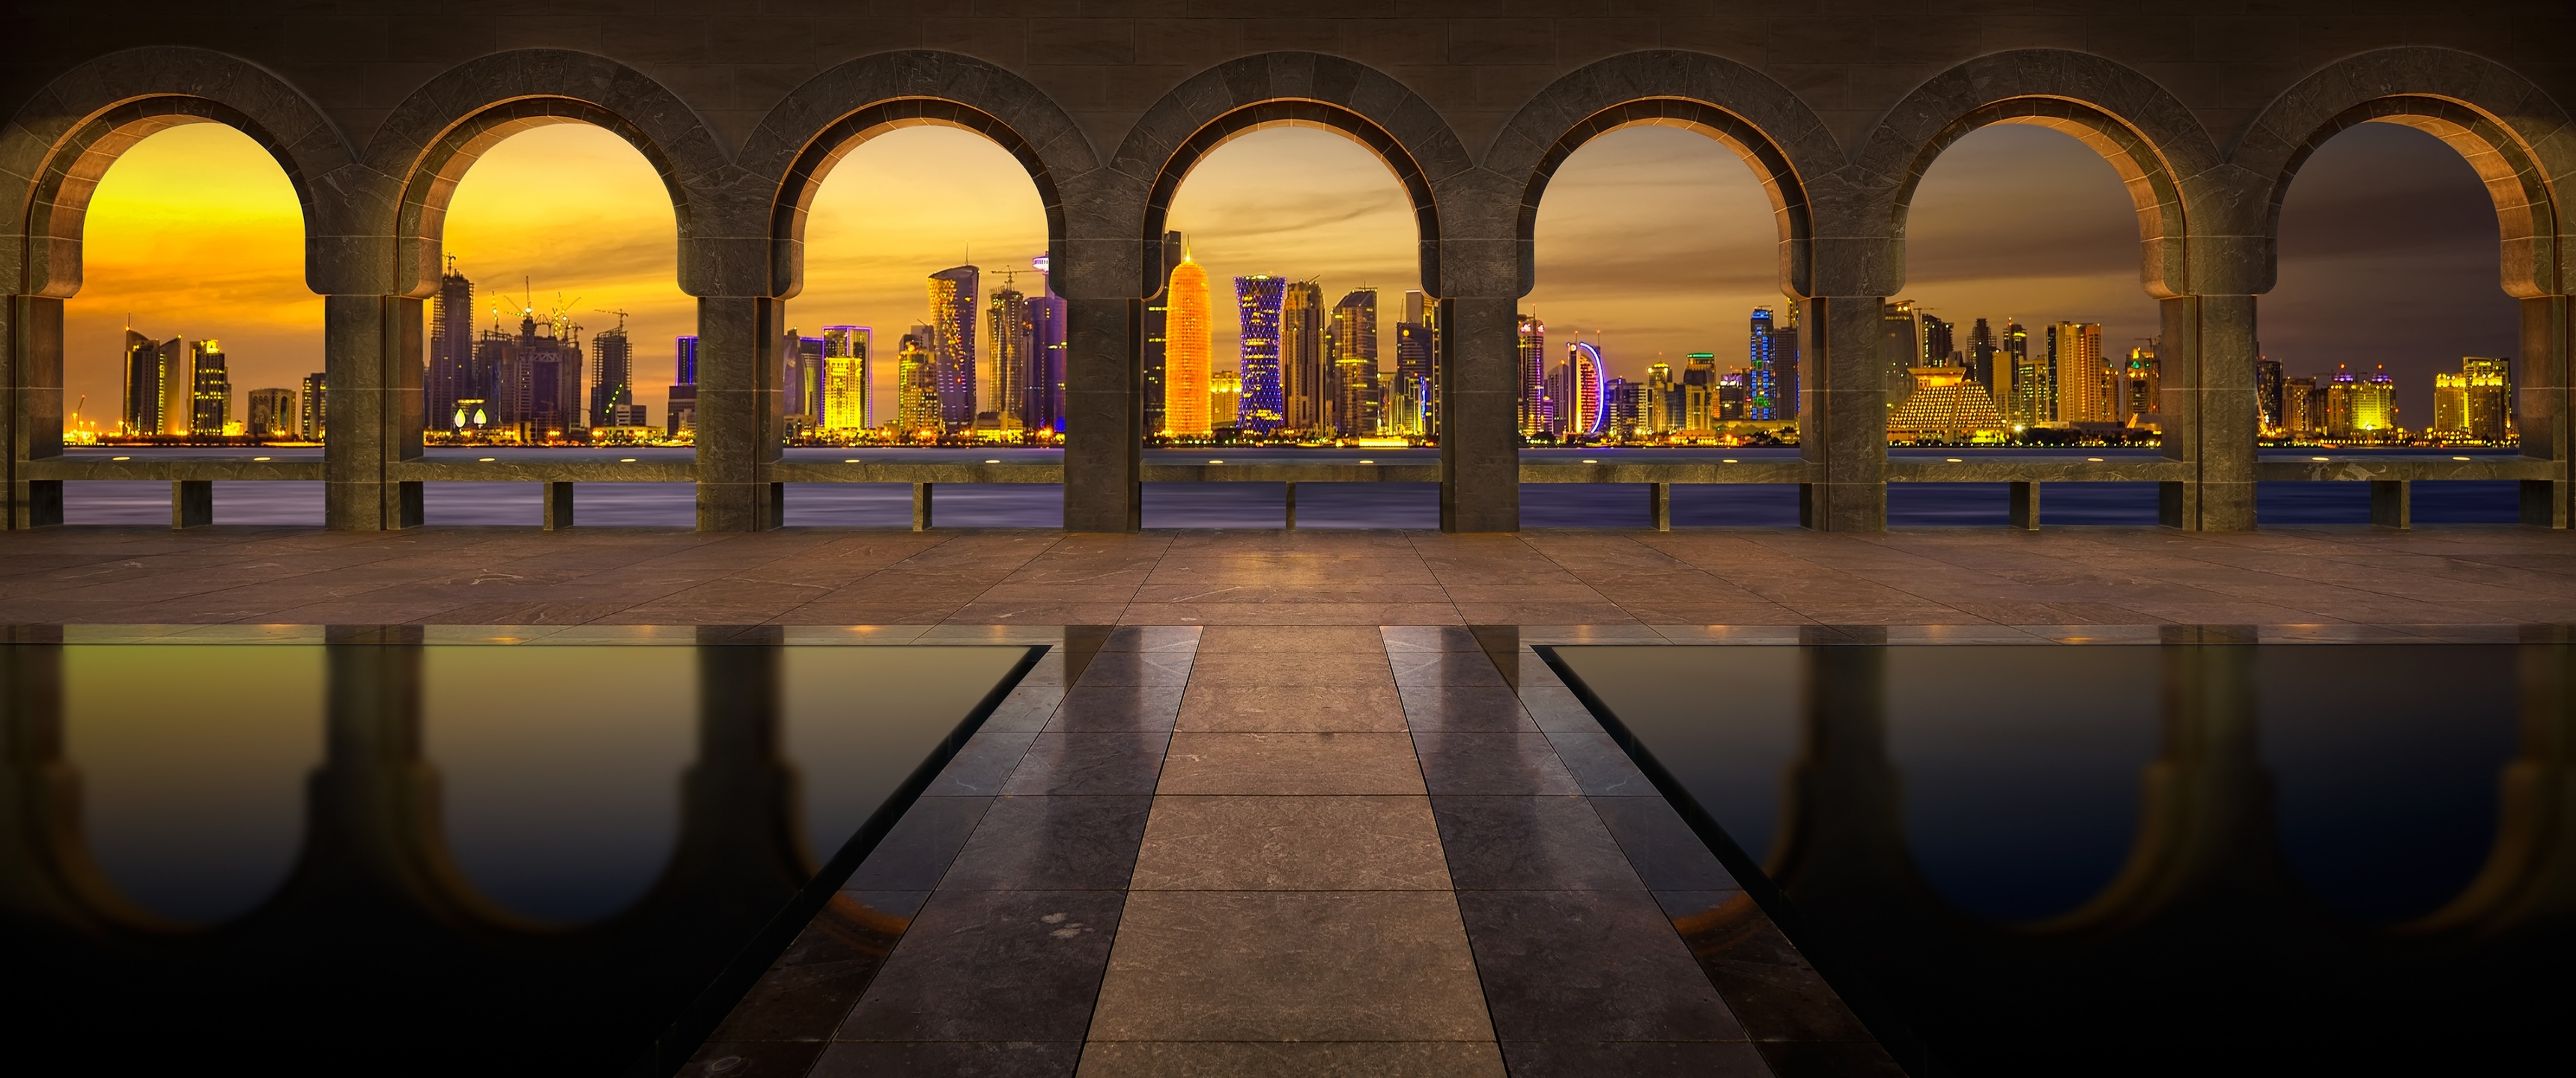 Museum of Islamic Art Wallpaper 4K, Doha, Qatar, Arches, City lights